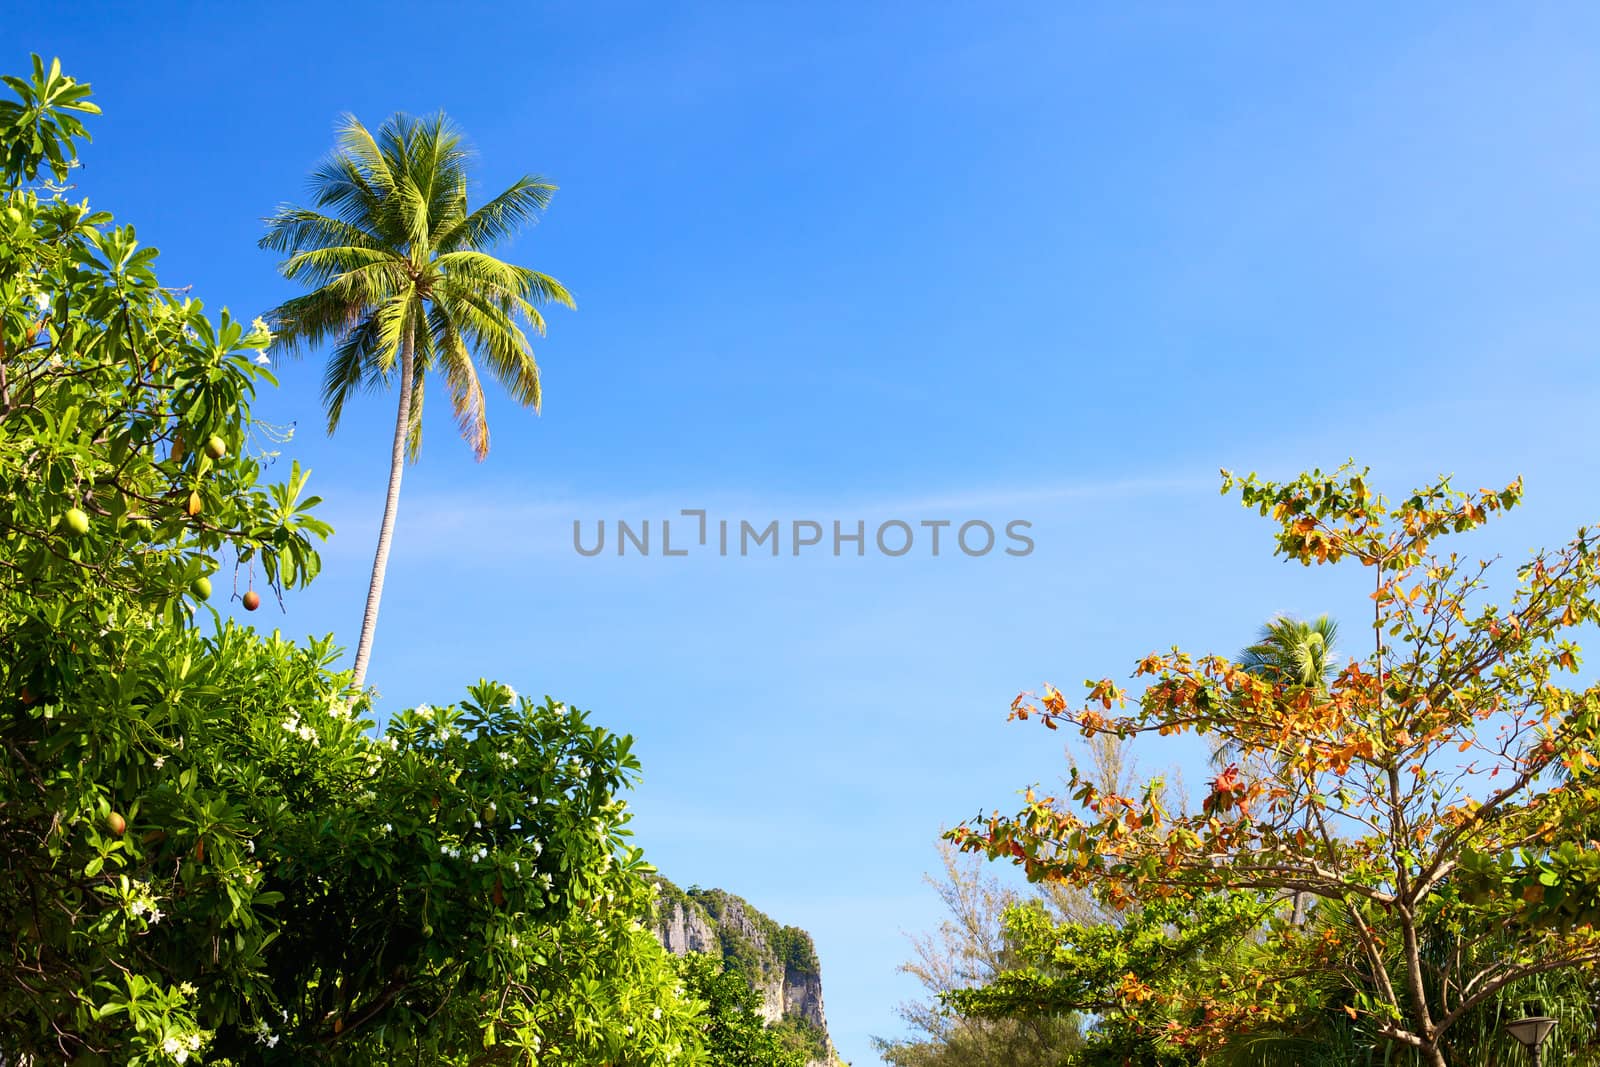 green thai trees against blue sky background